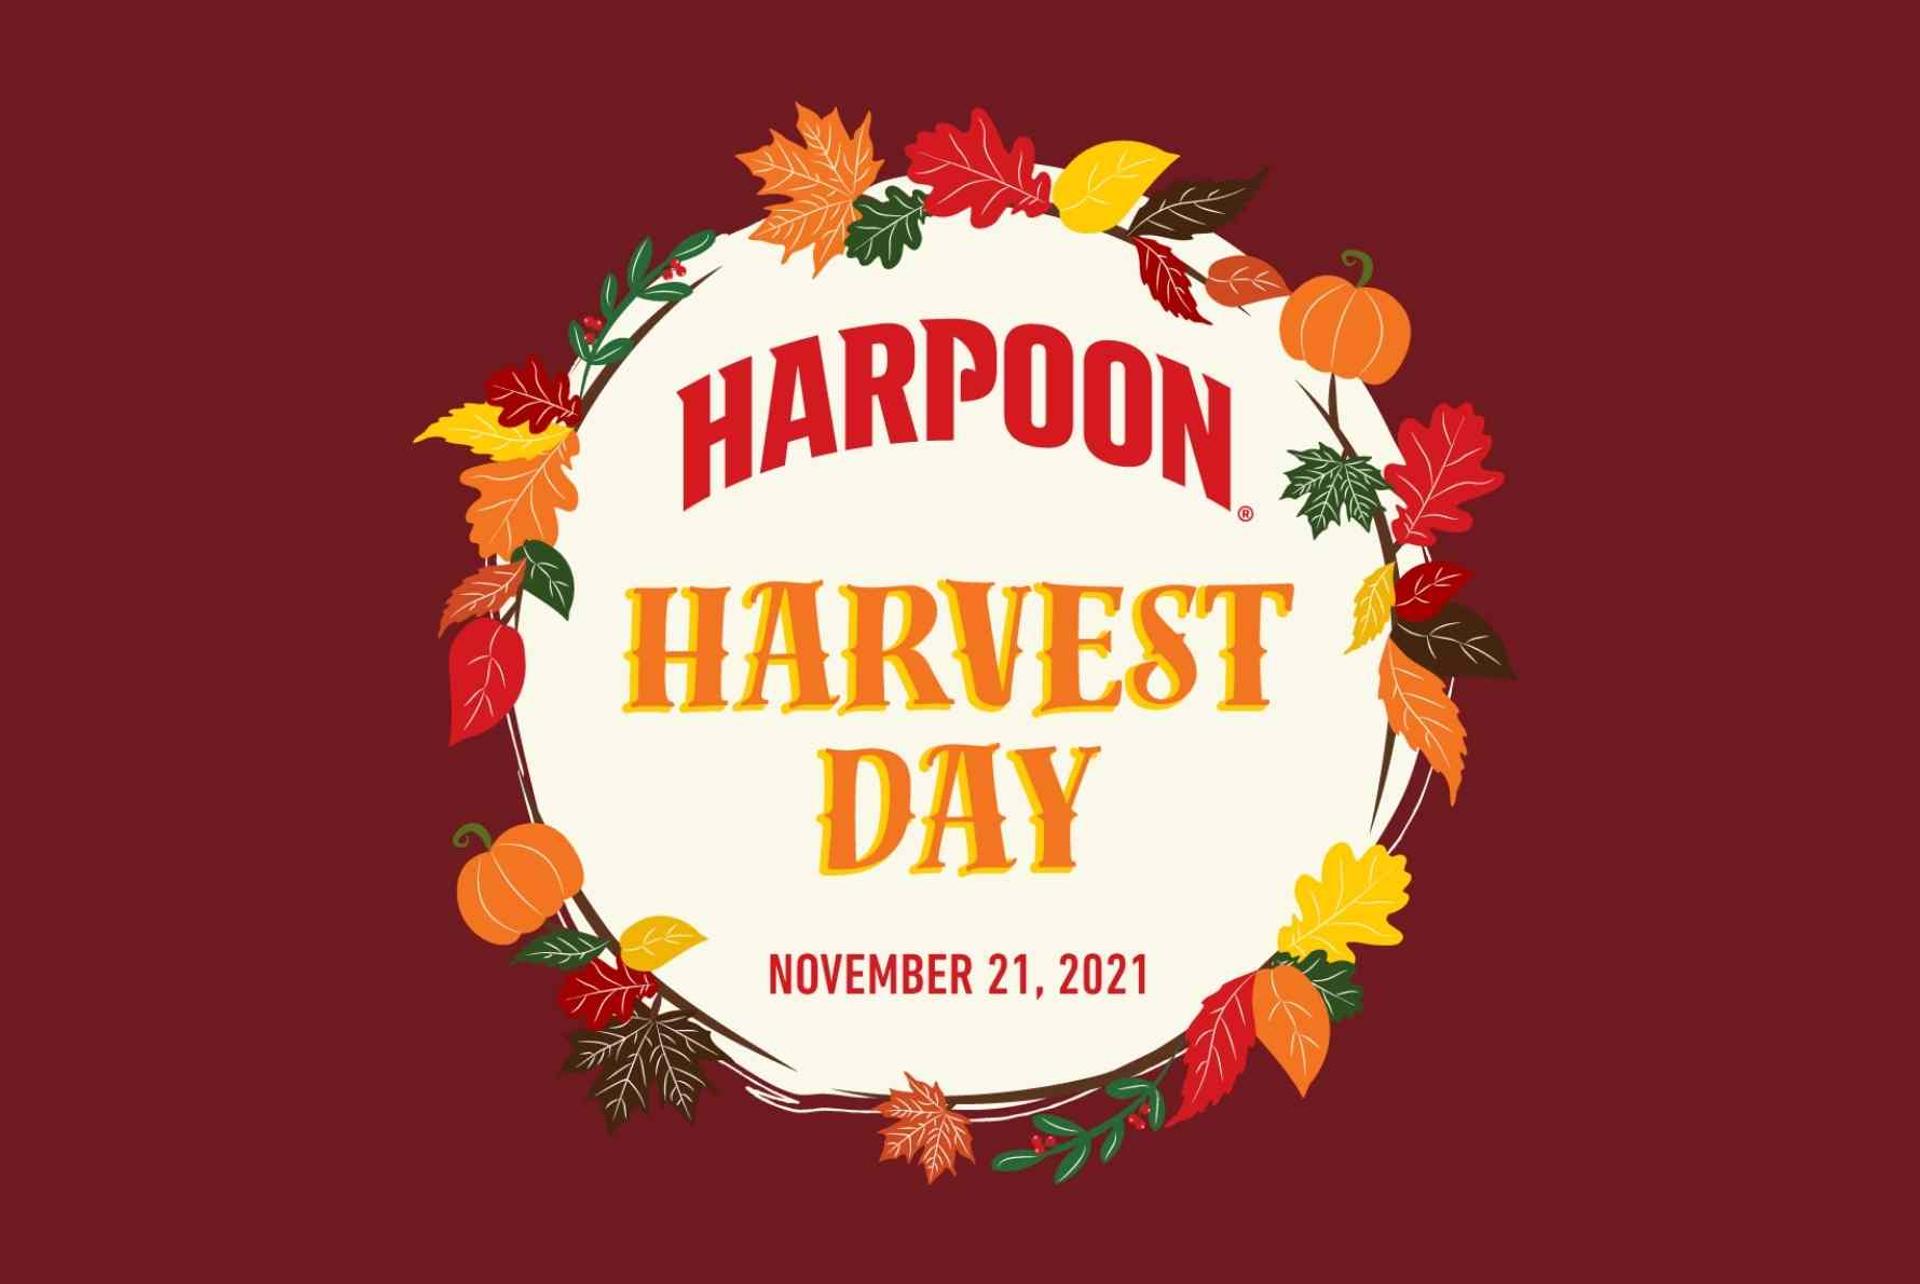 Harpoon Brewery: Harpoon Harvest Day